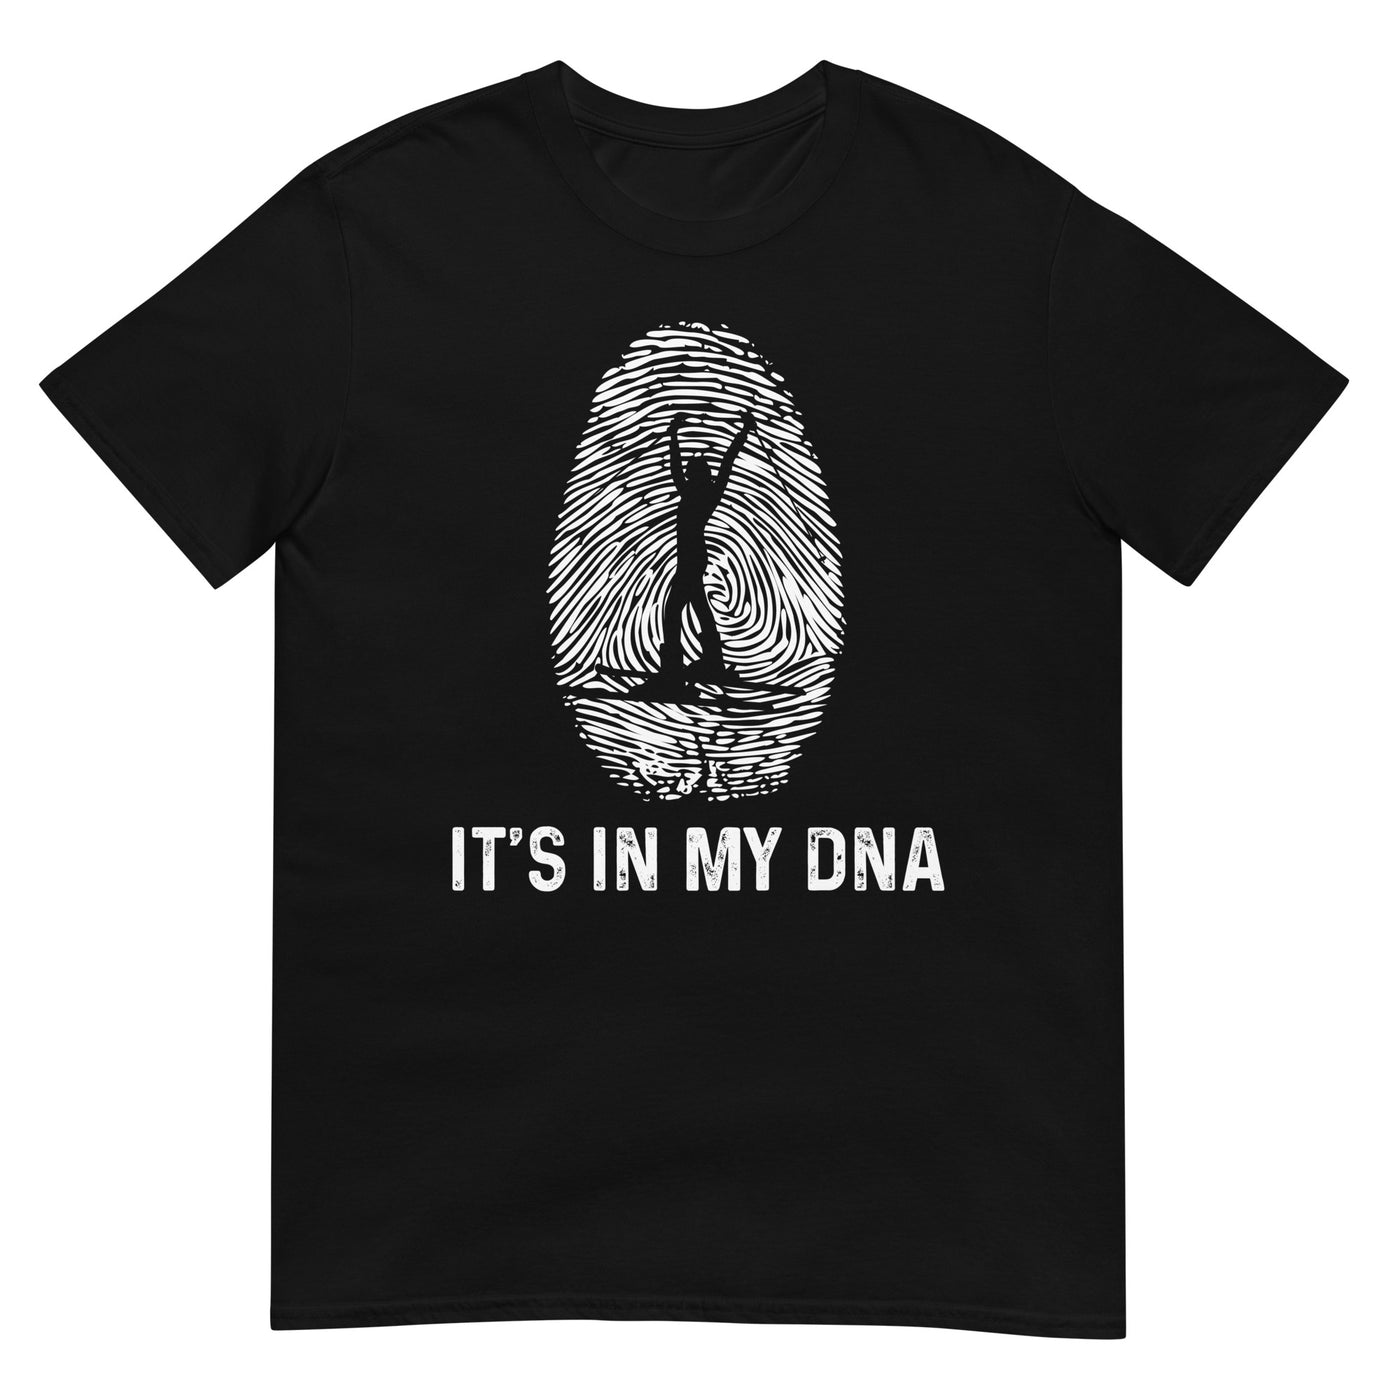 It's In My DNA 1 - T-Shirt (Unisex) klettern ski xxx yyy zzz Black